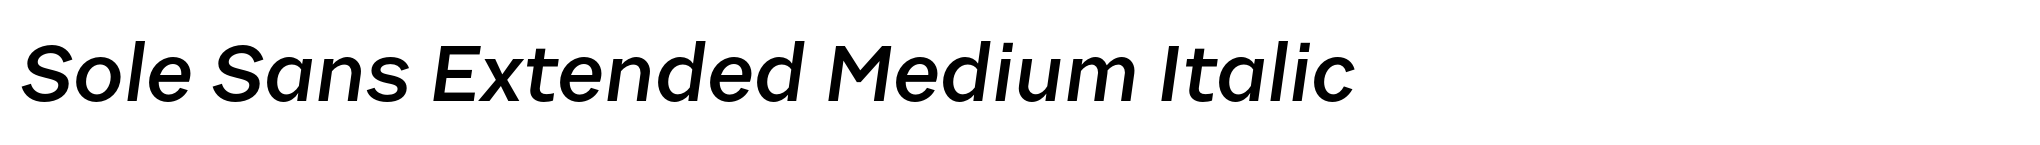 Sole Sans Extended Medium Italic image